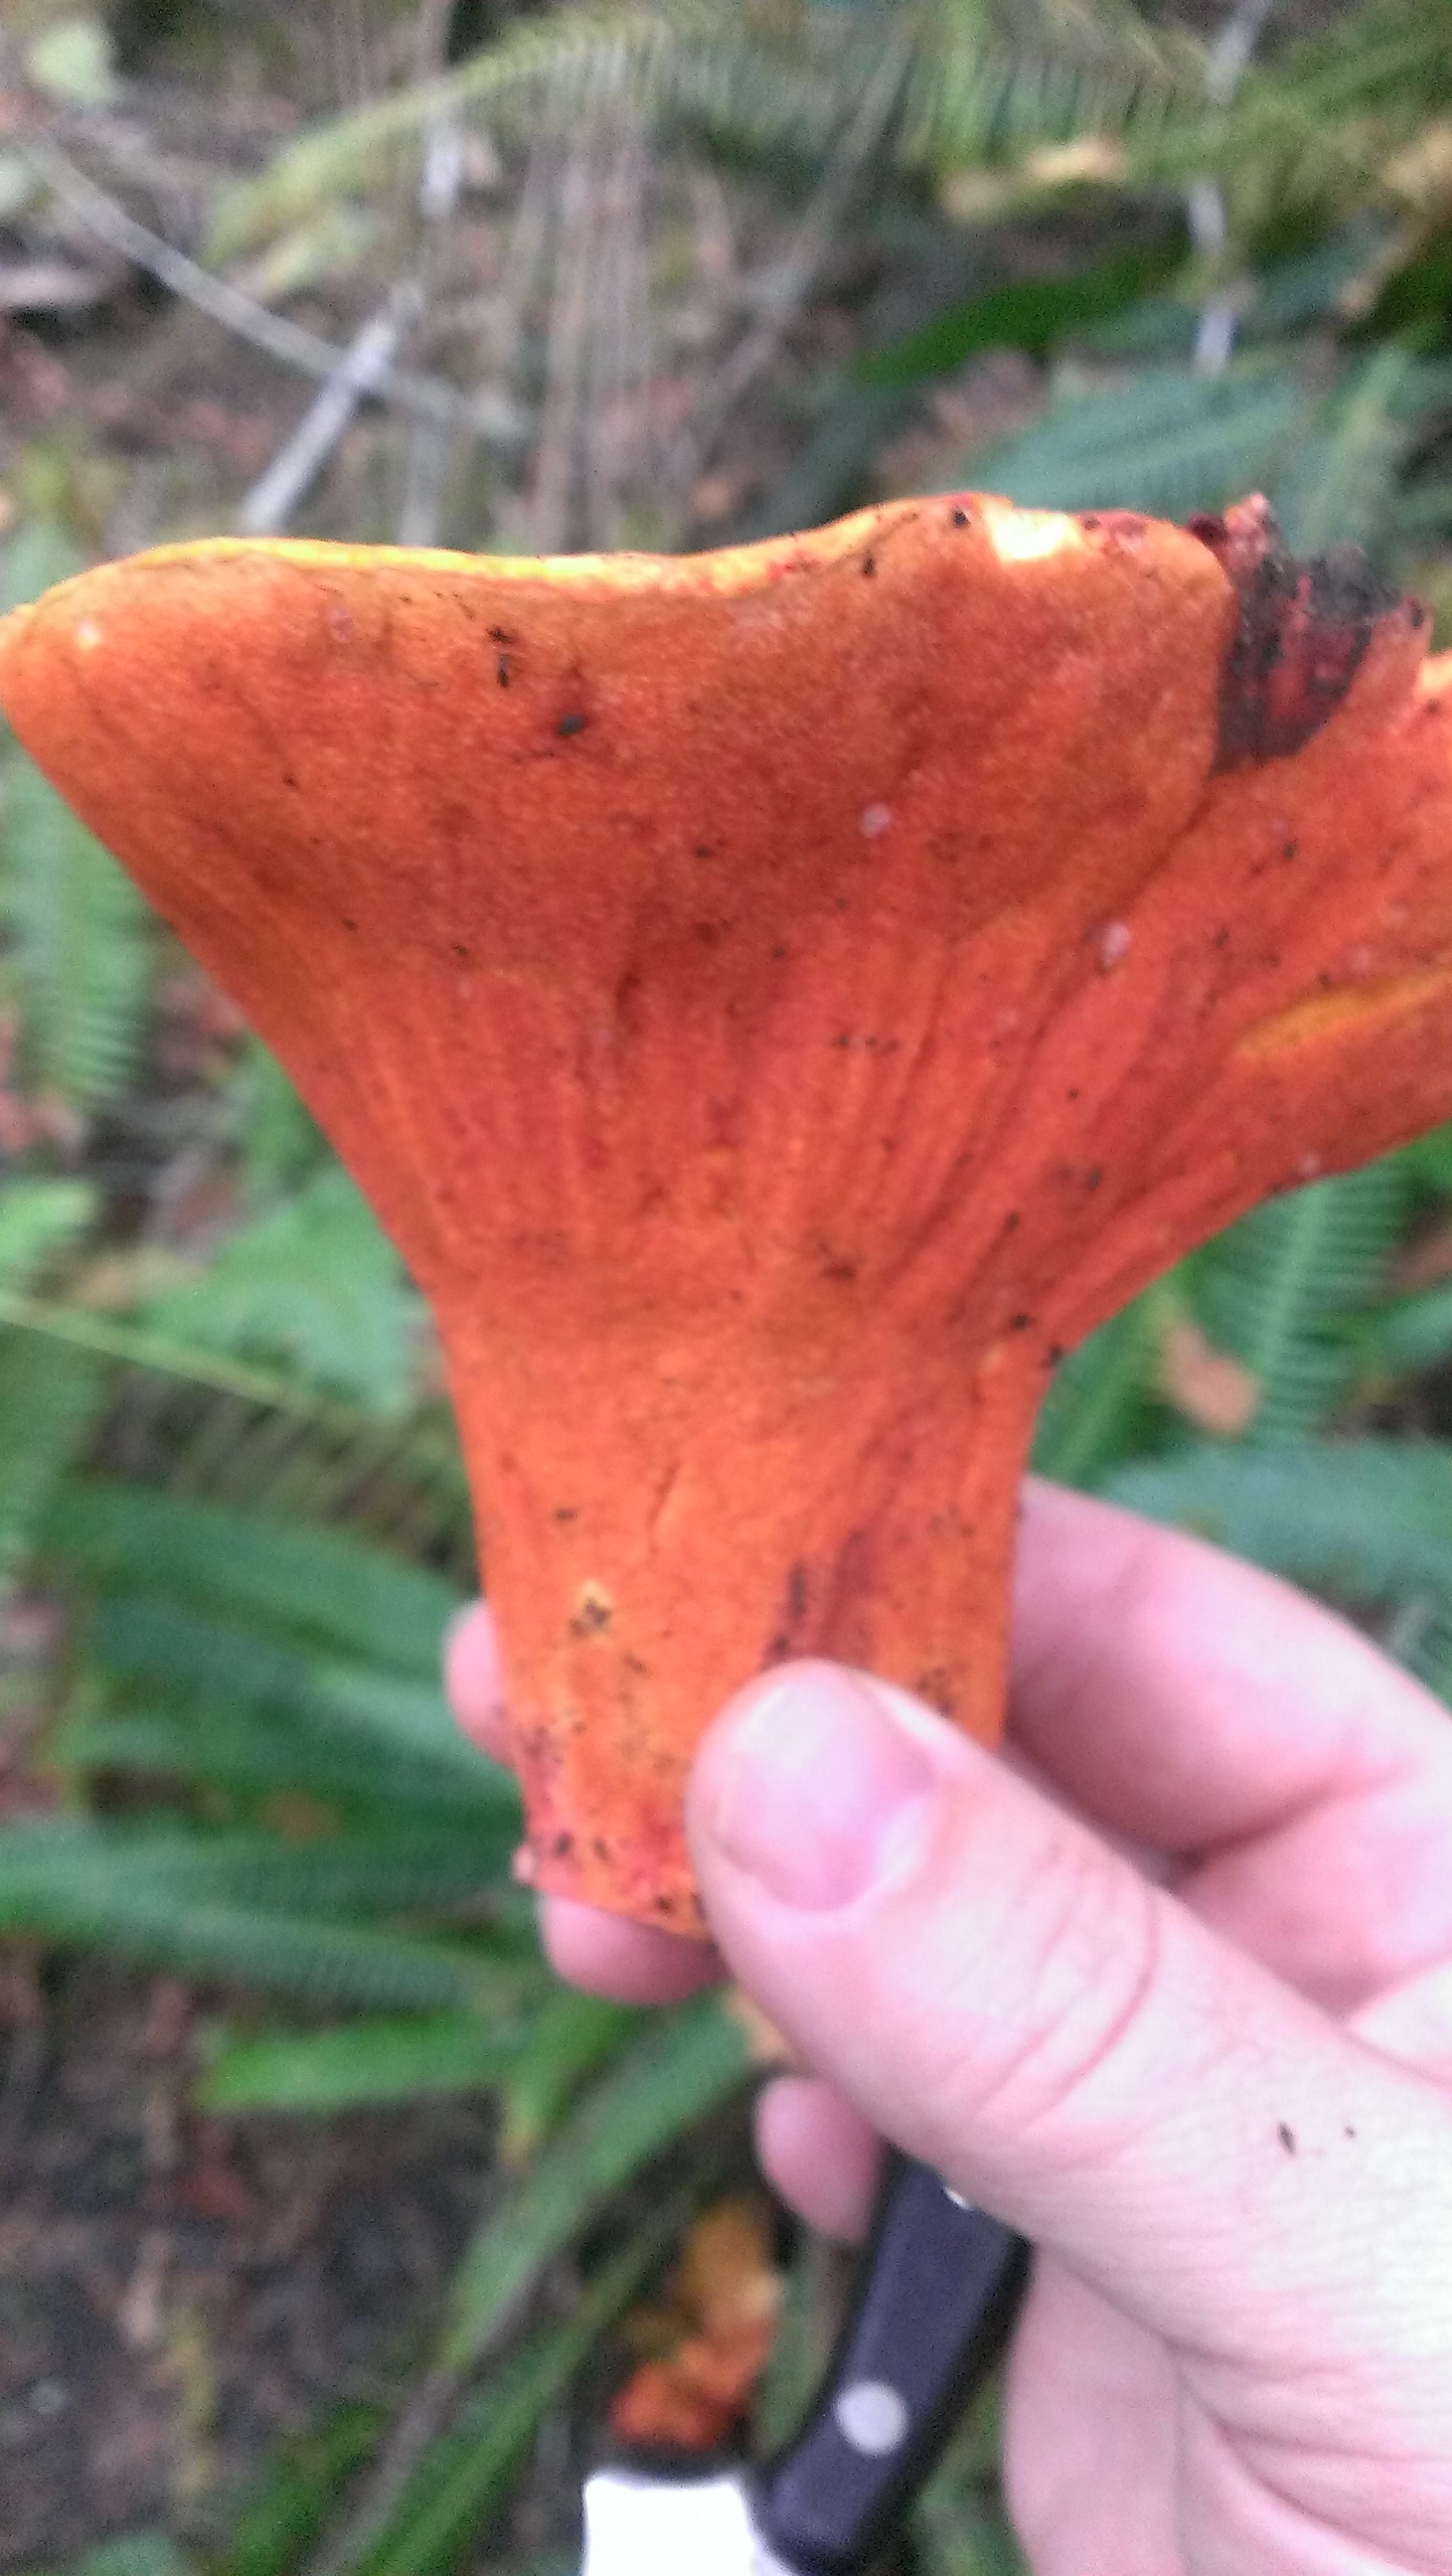 Wild Mushrooms – Shane's Great Adventure